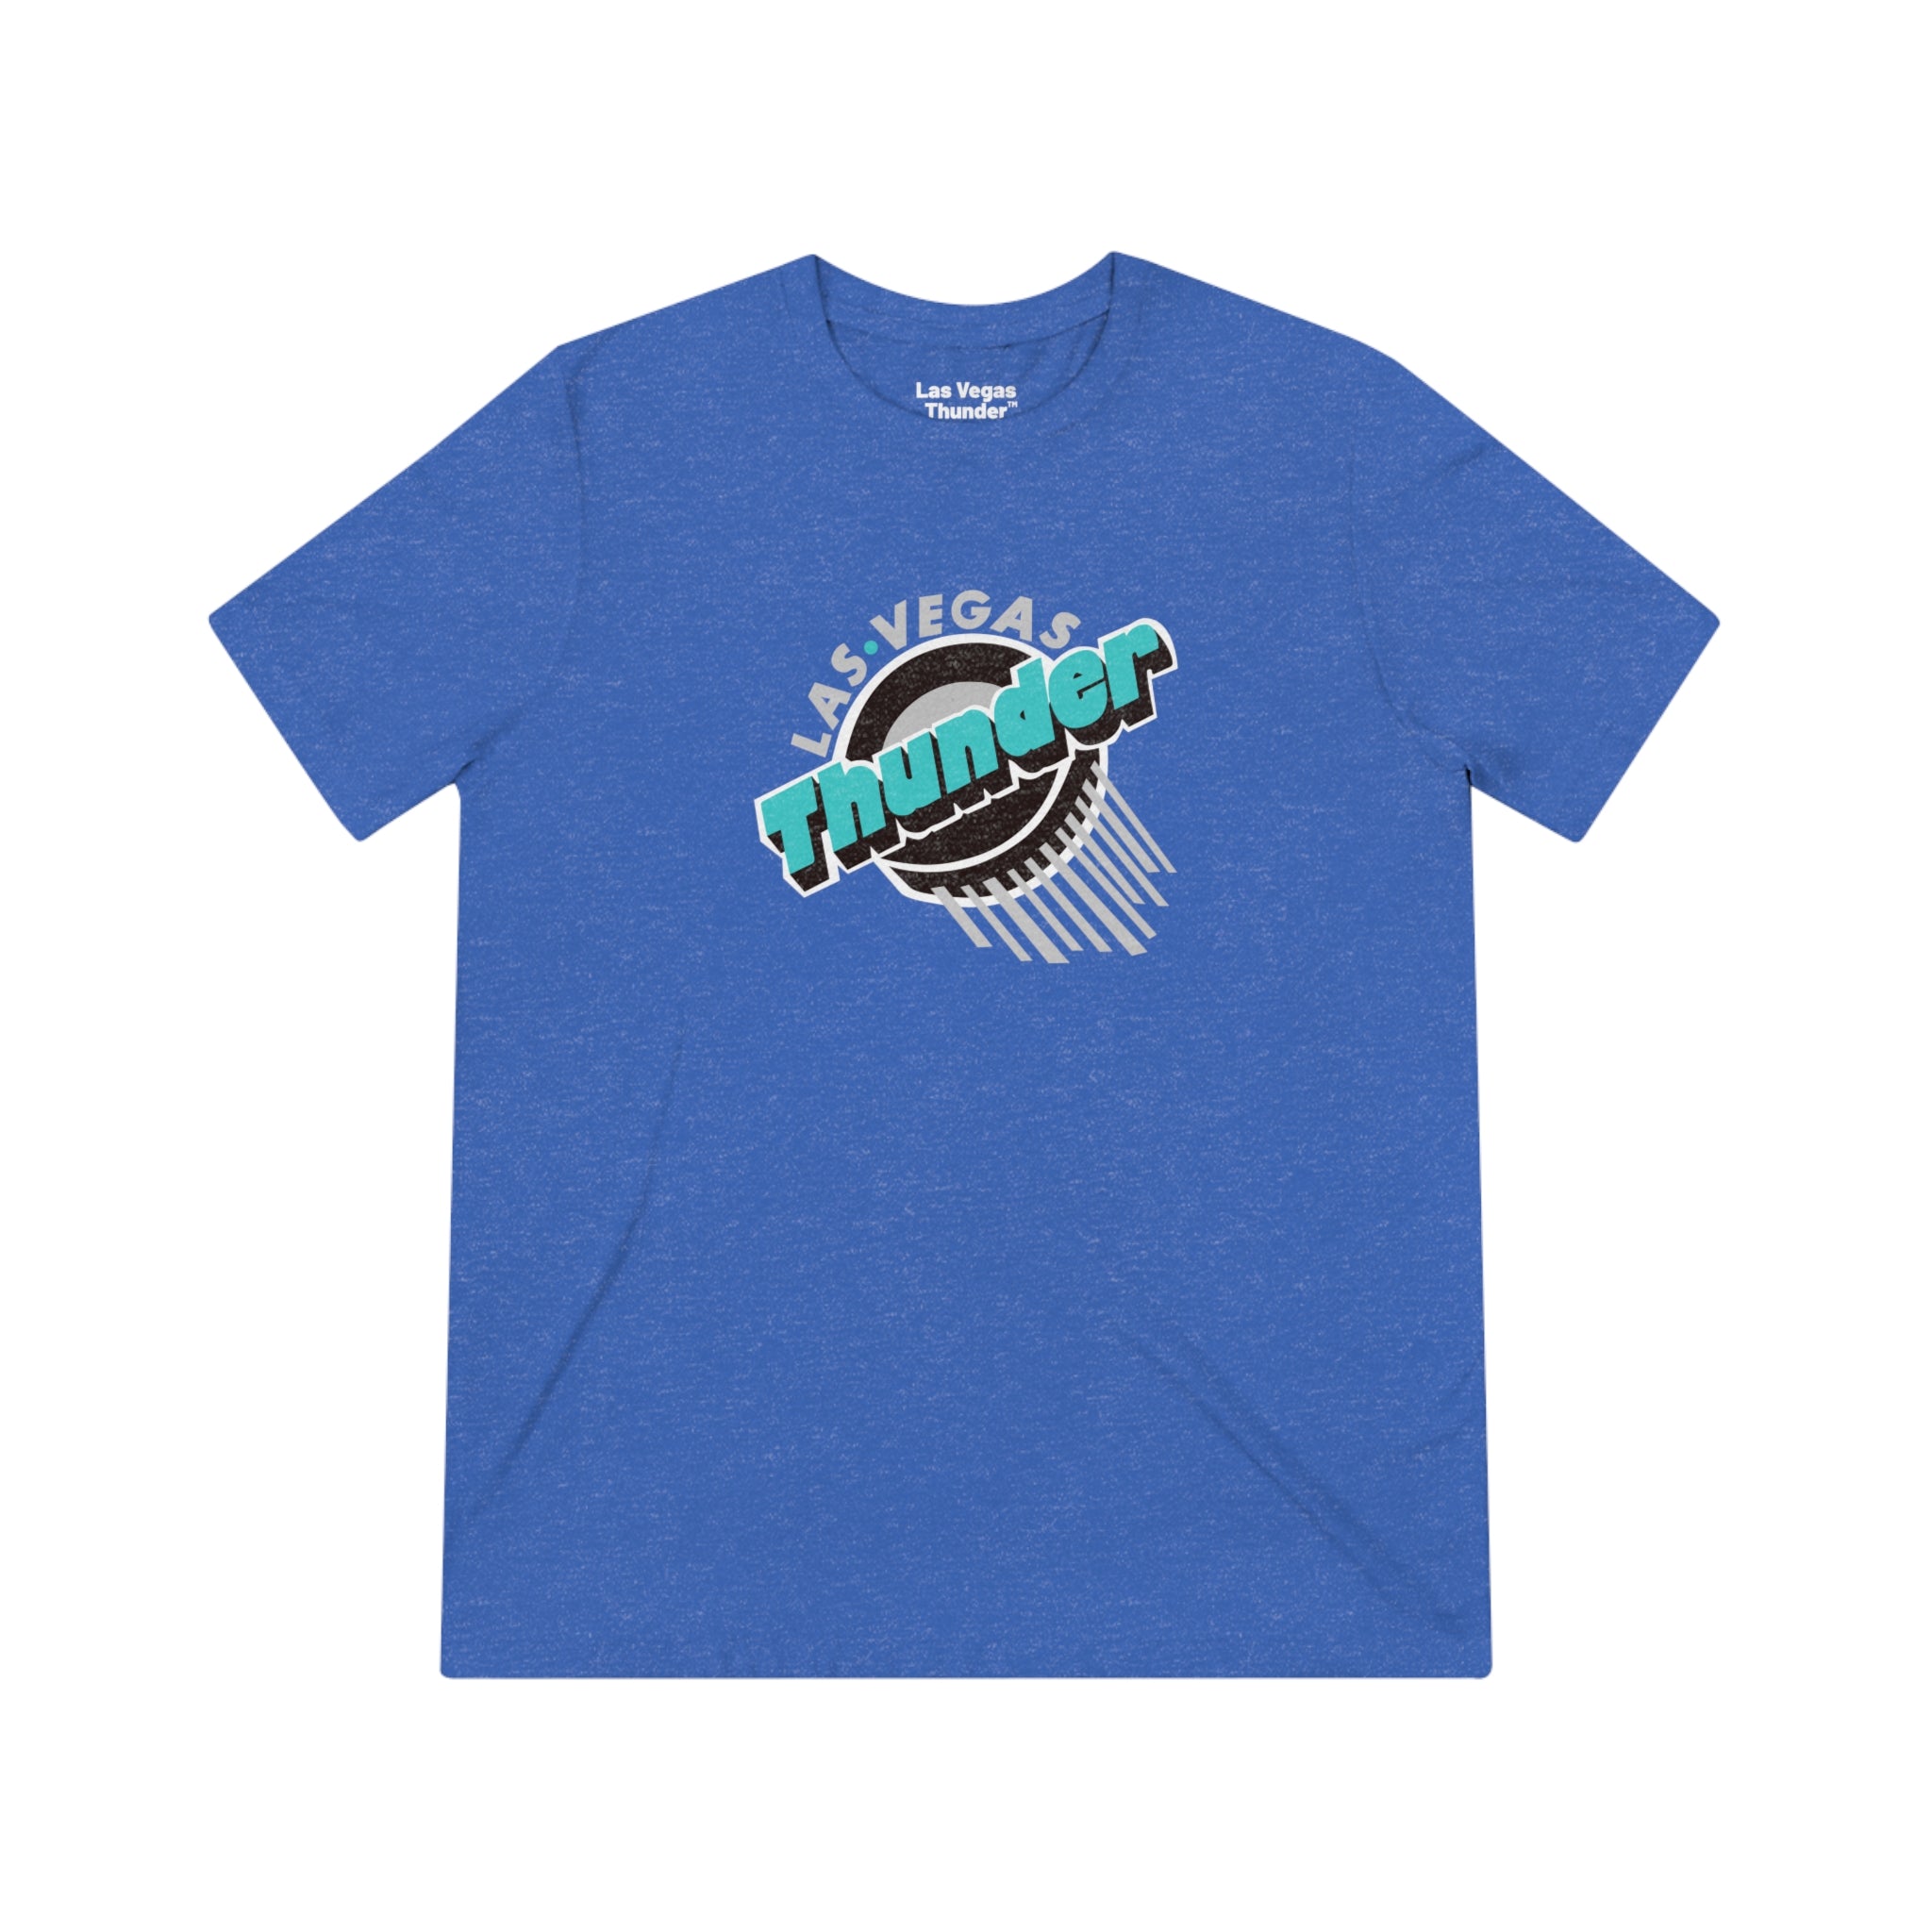 Las Vegas Thunder™ Puck T-Shirt (Tri-Blend Super Light)